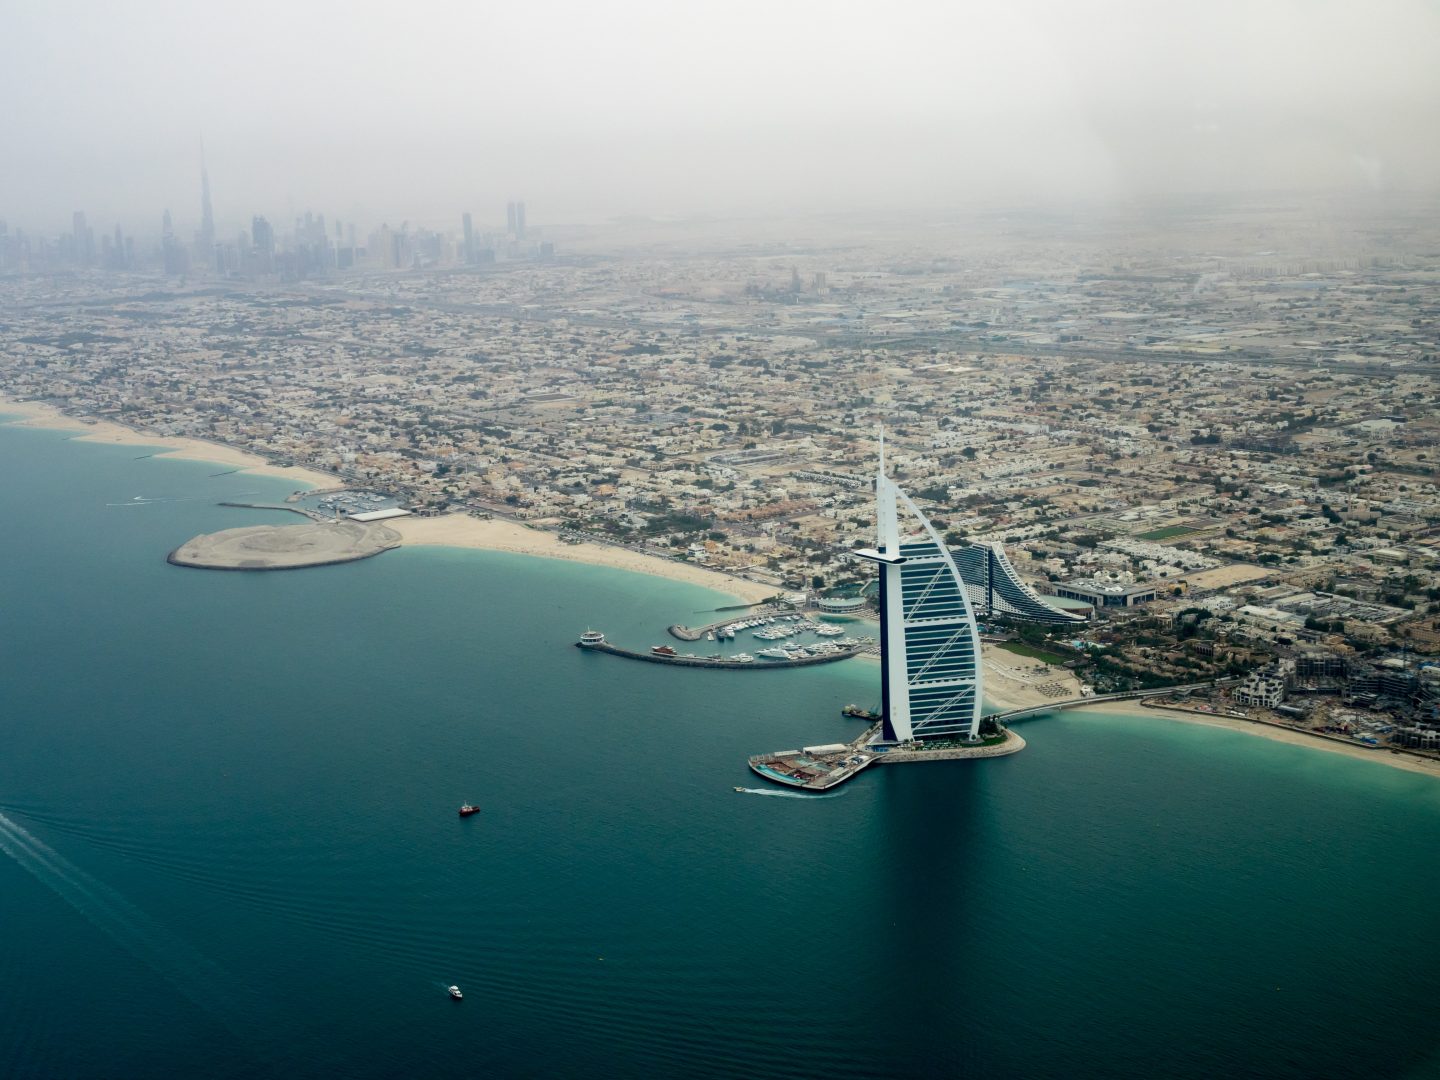 The Places We Wish To Go… Dubai